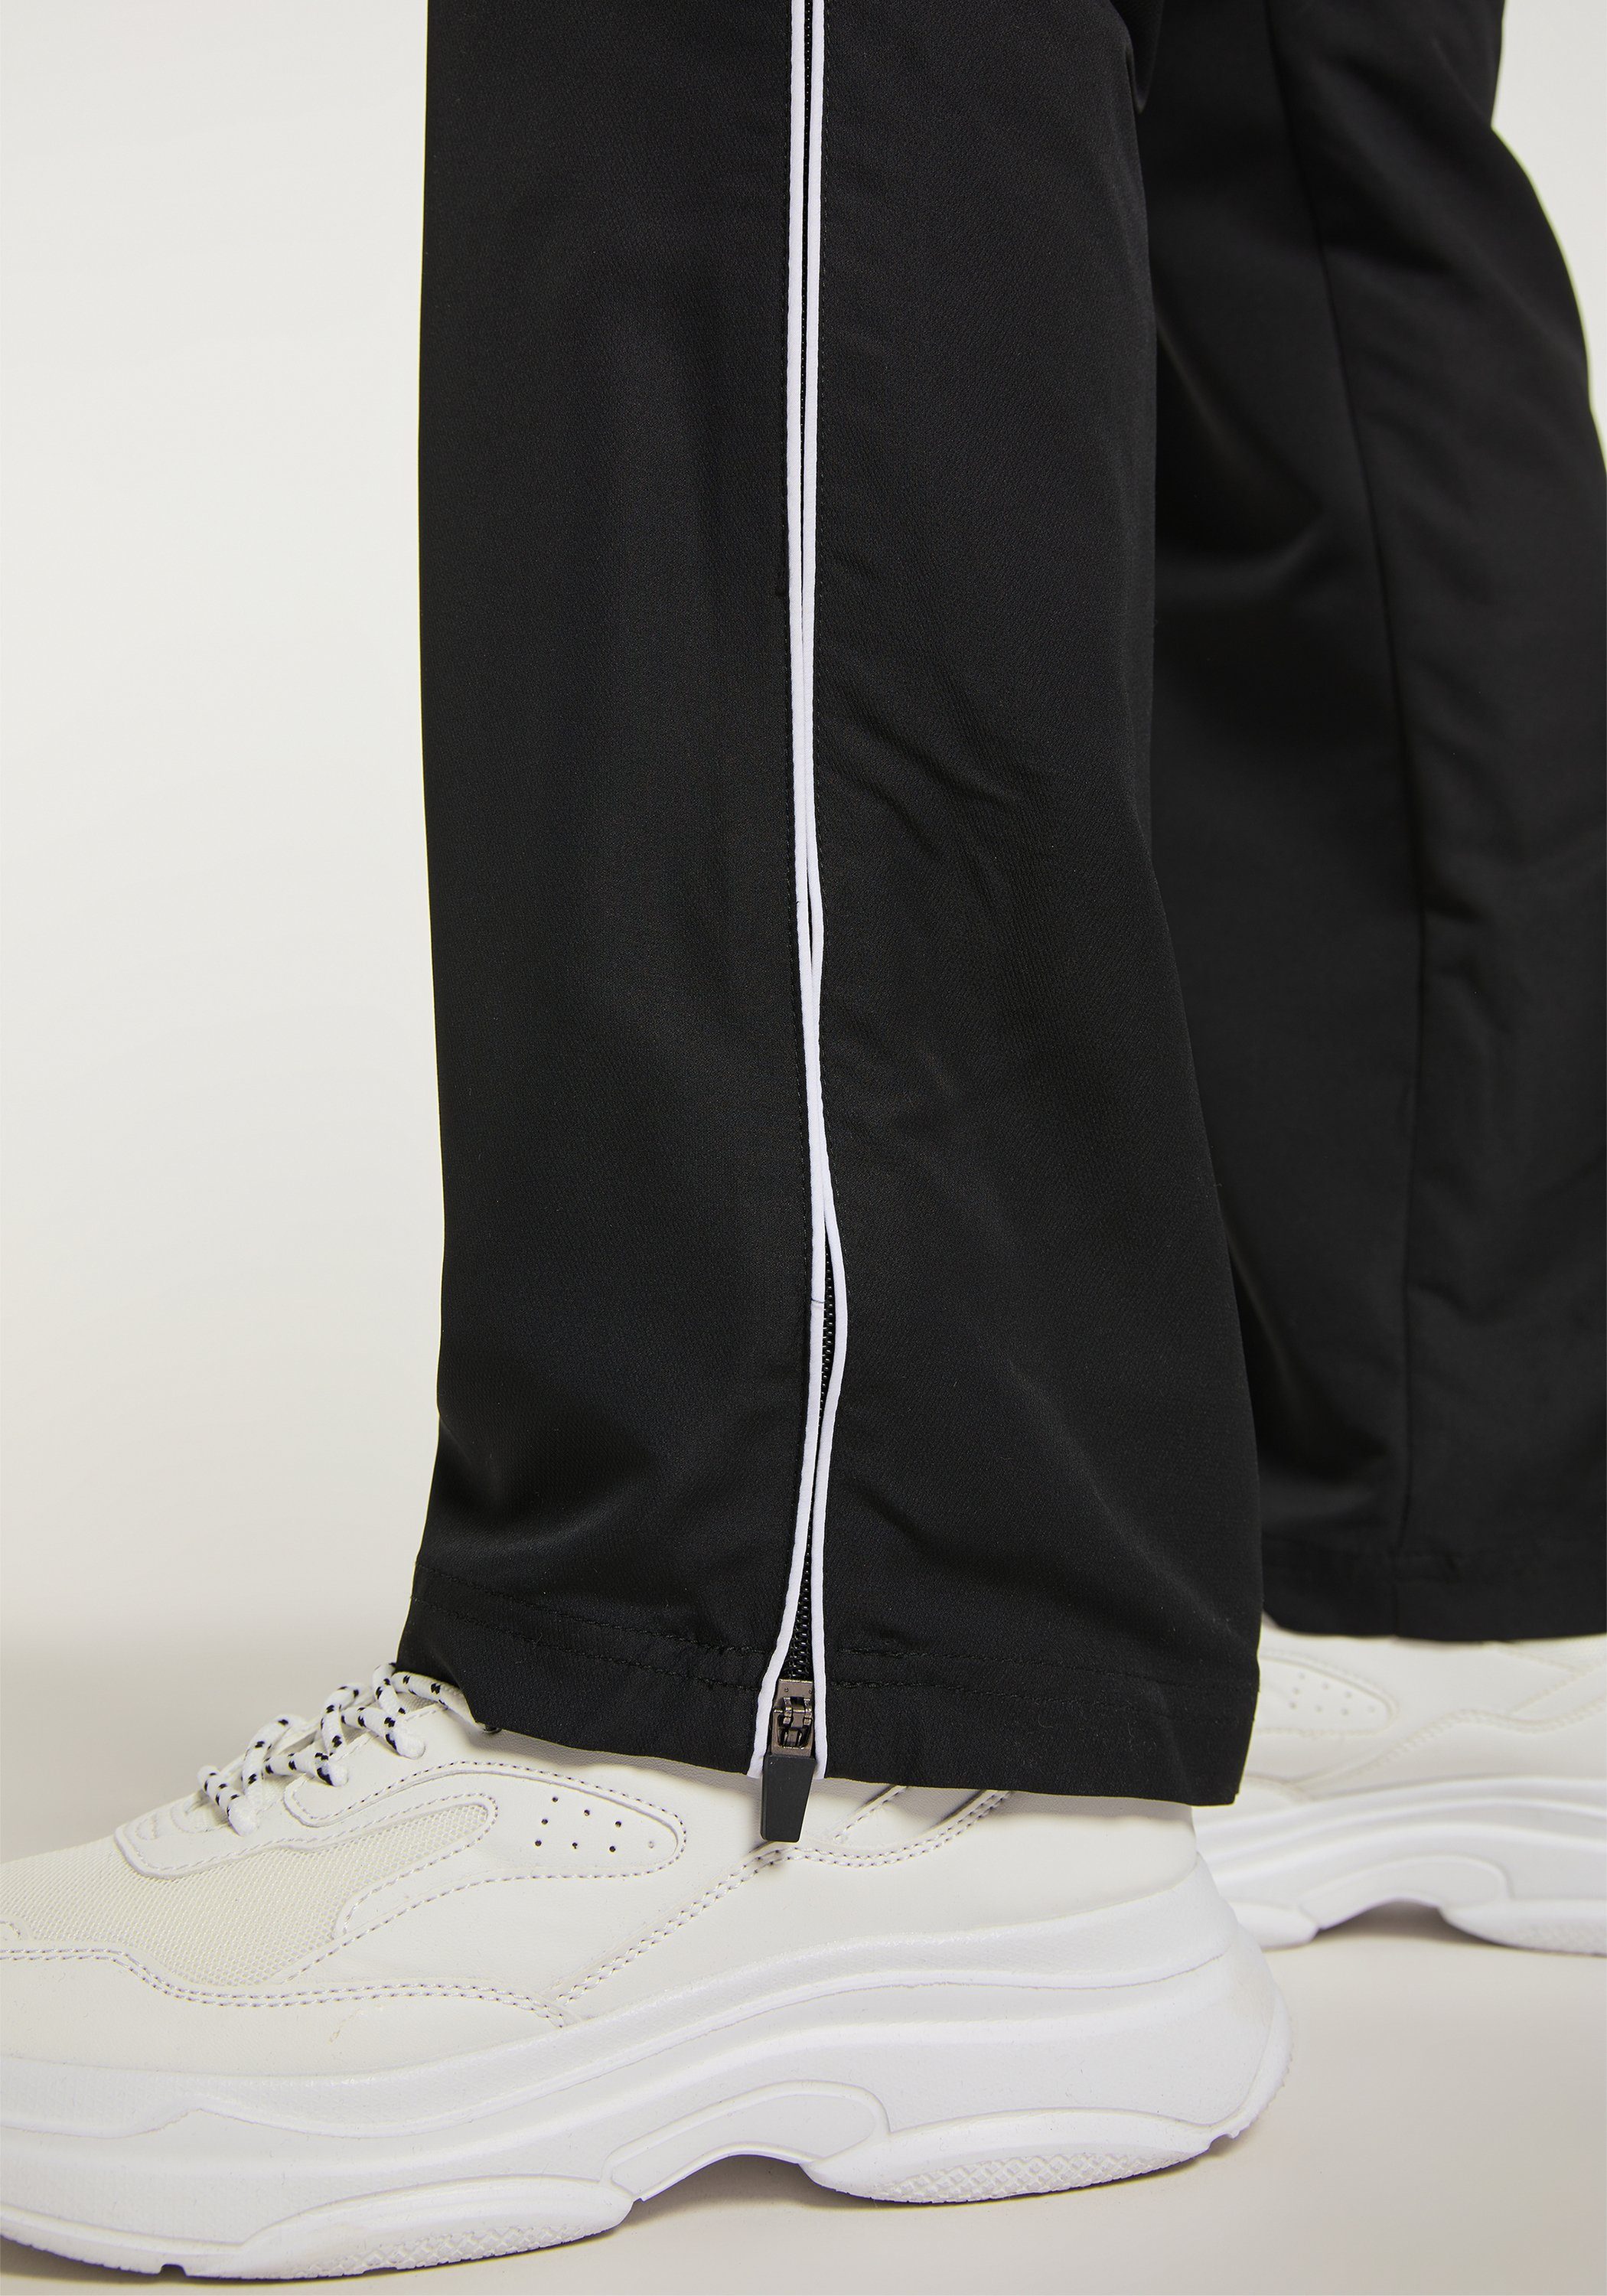 MERRIT Sportswear Hose Sporthose Joy black/white